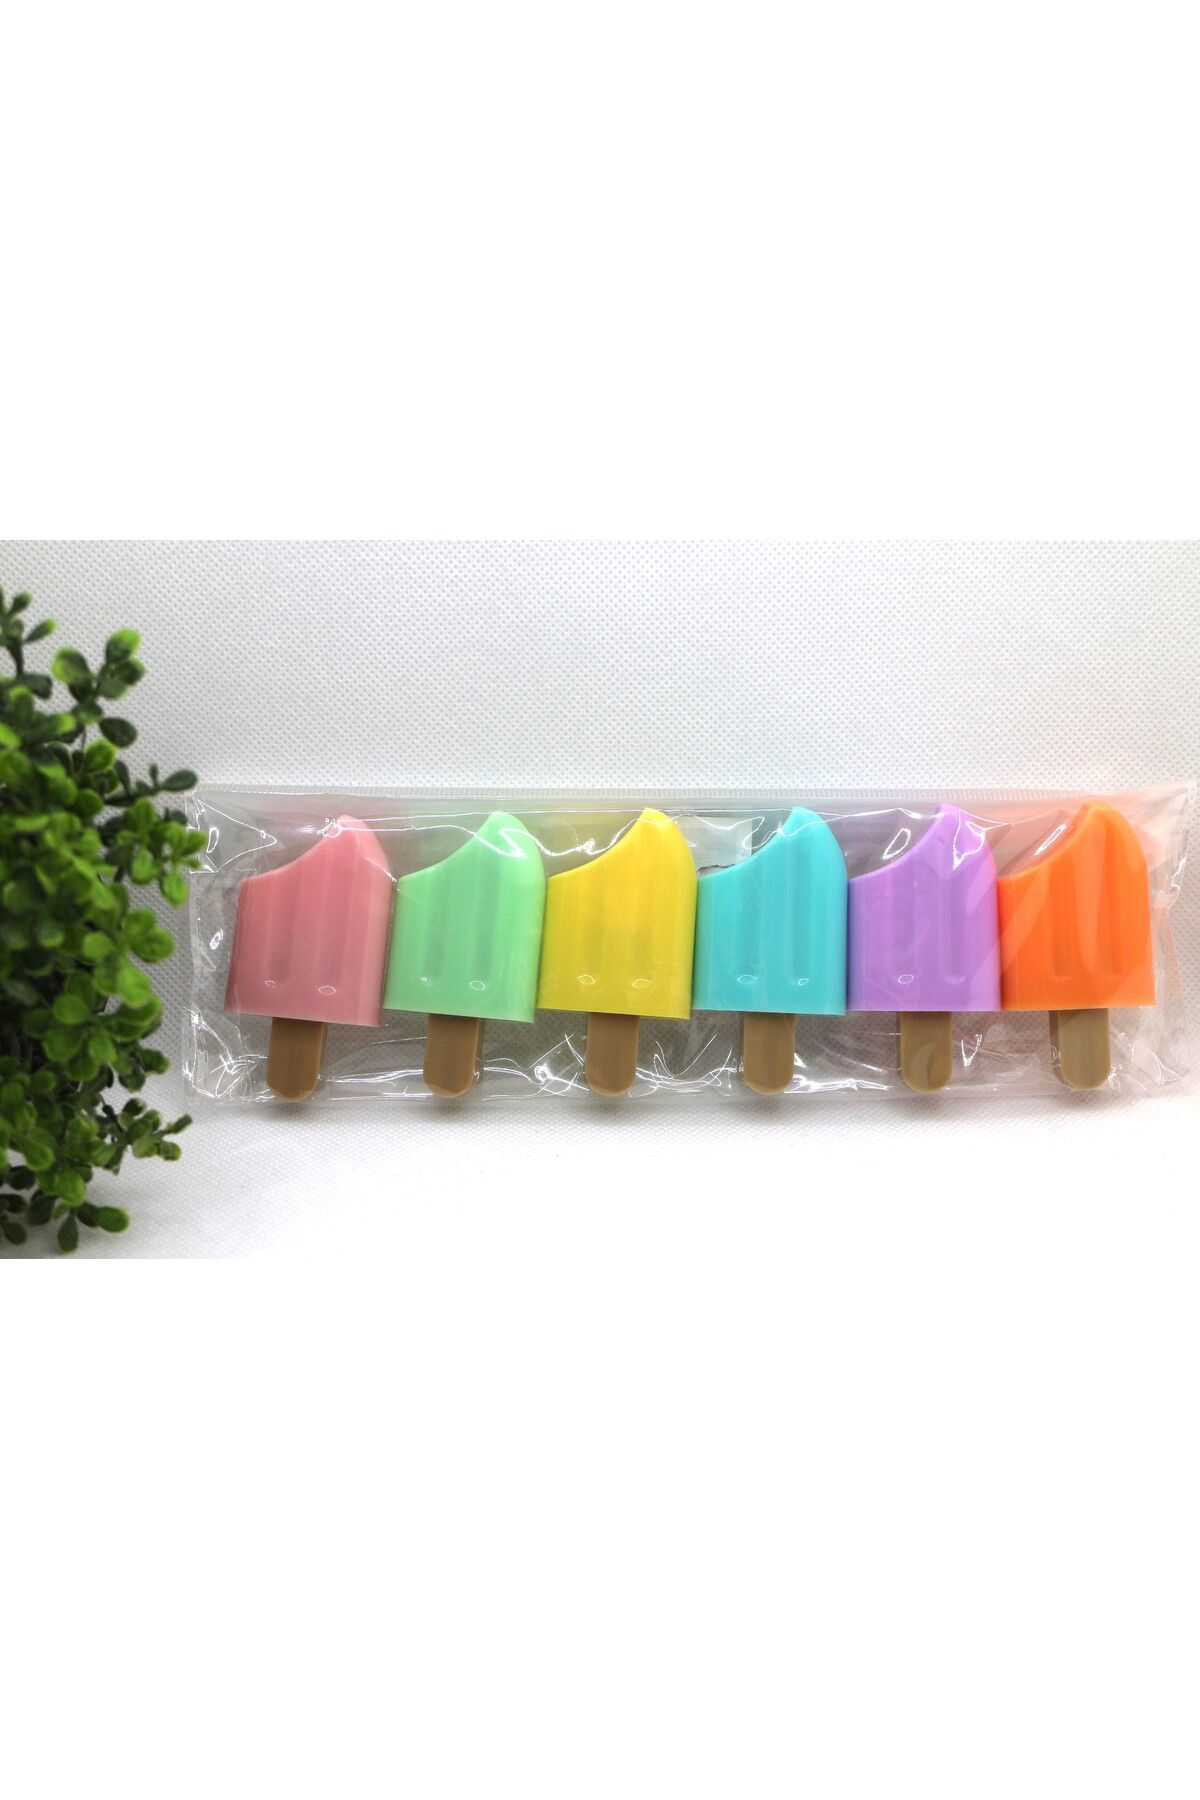 Tezcan Aksesuar Mini Dondurmalı Fosforlu Kalem Seti 6-Renk